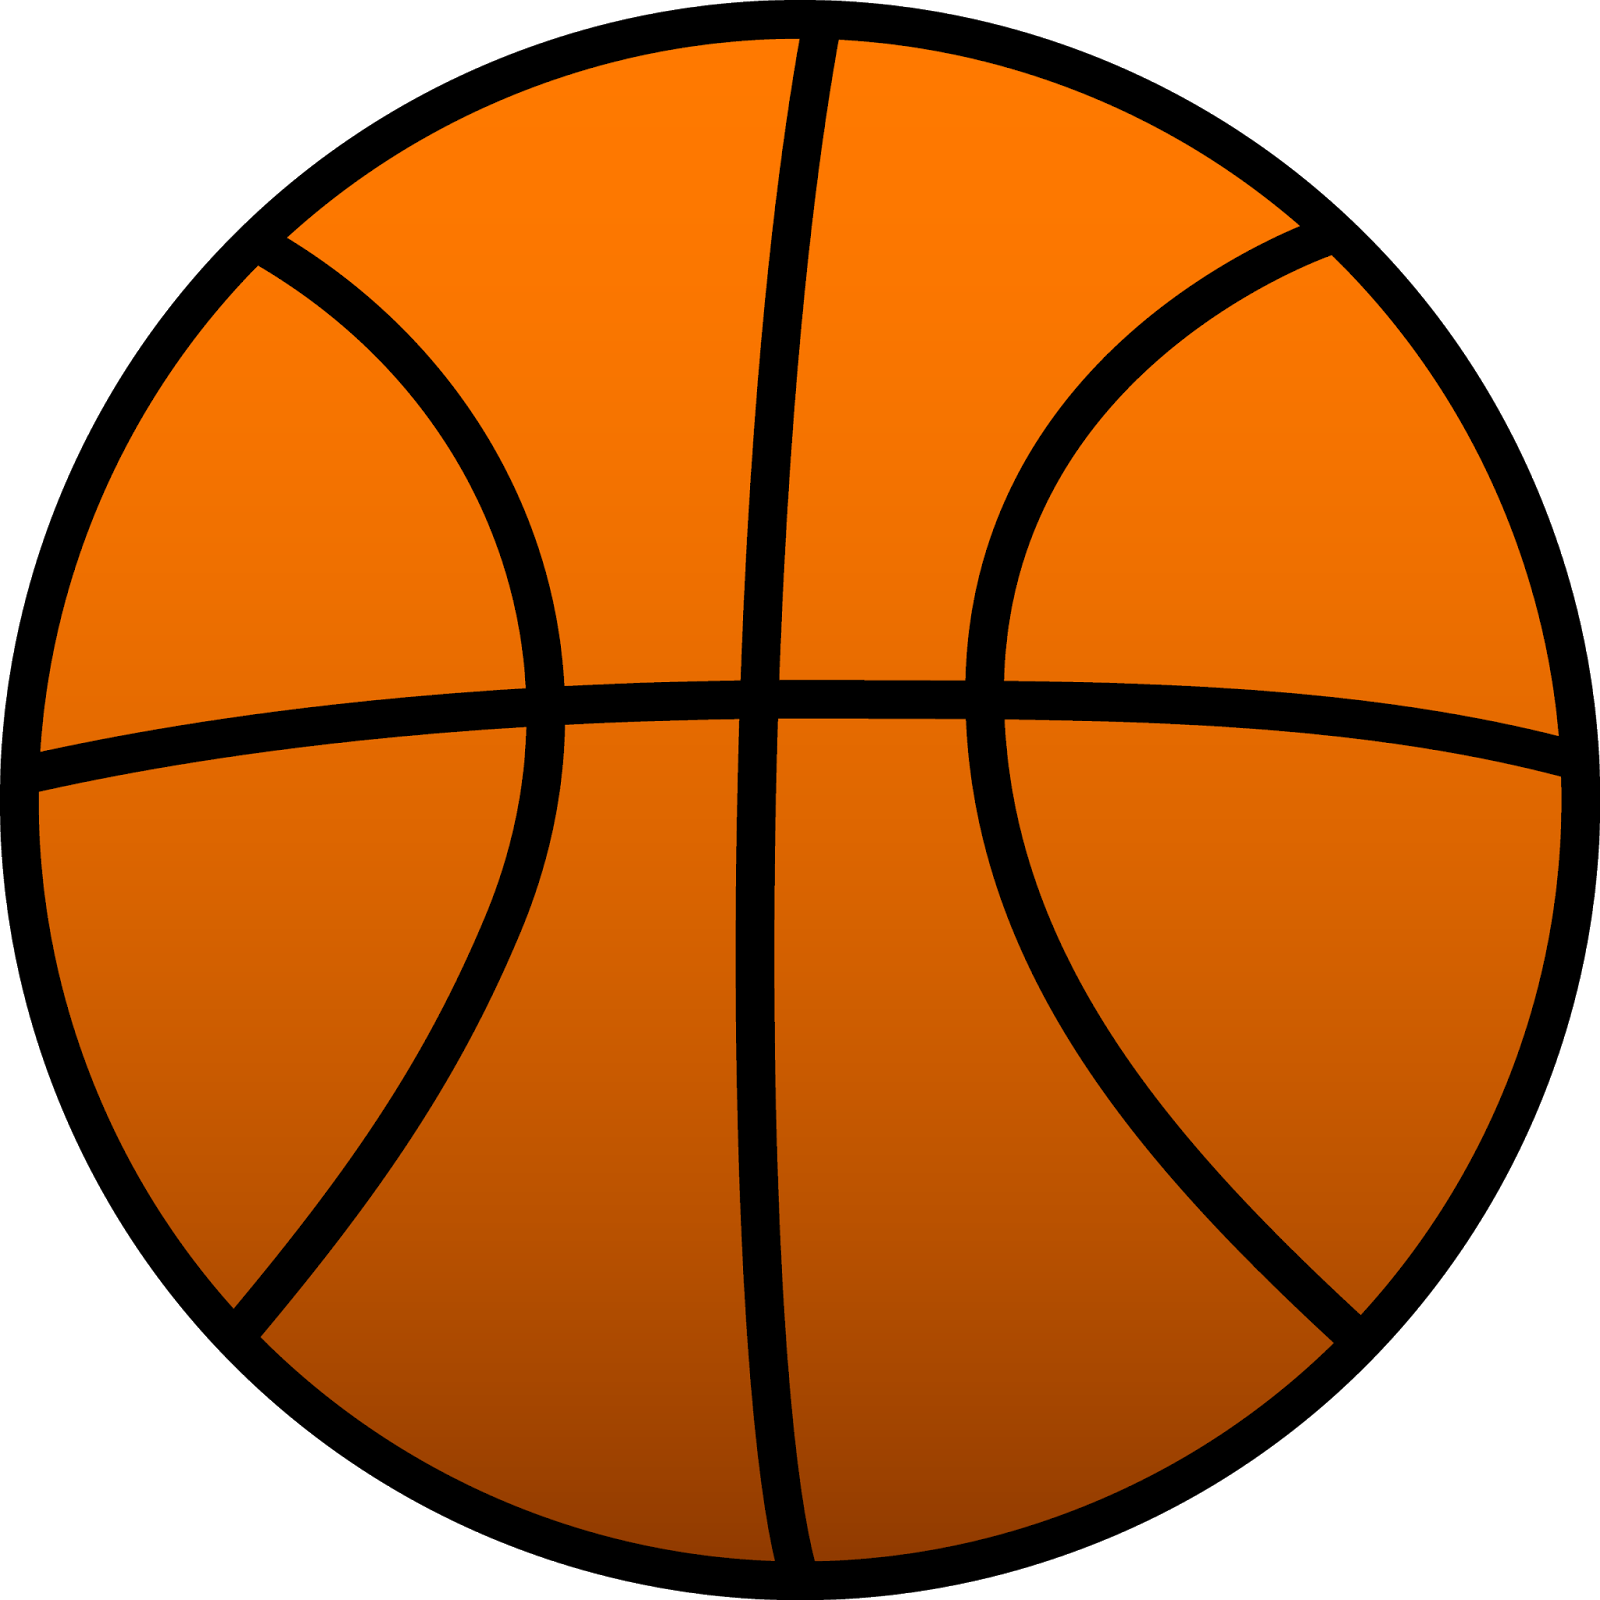 Half Basketball Outline The Swan Valley Basketball